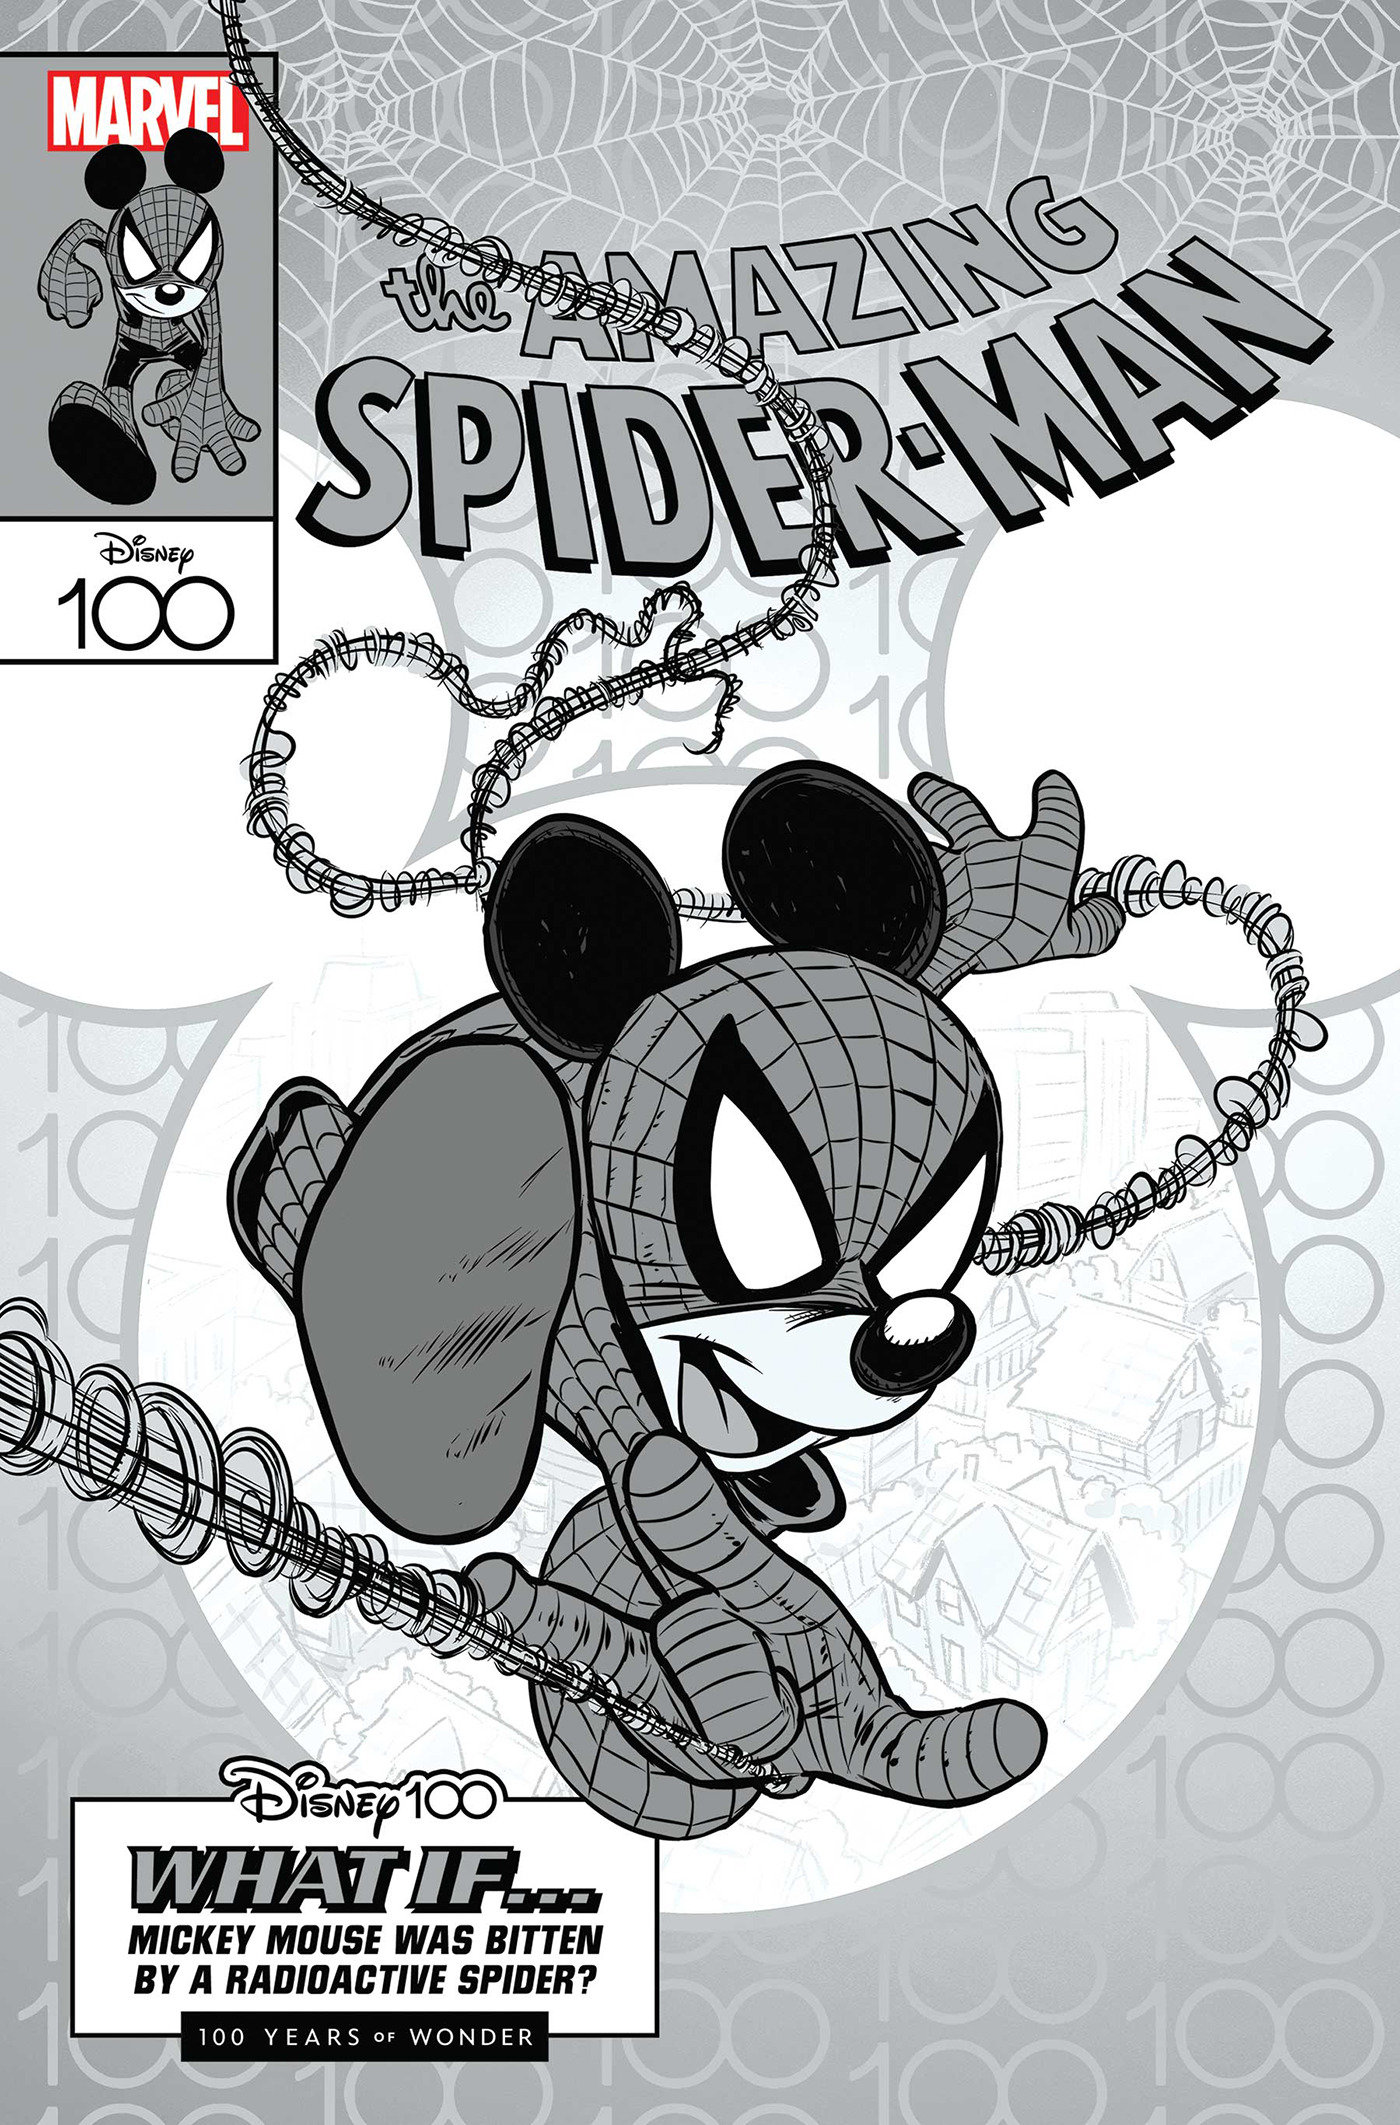 Amazing Spider-Man #35 Claudio Sciarrone Disney100 Amazing Spider-Man Black And White Variant 1 for 100 Incentive